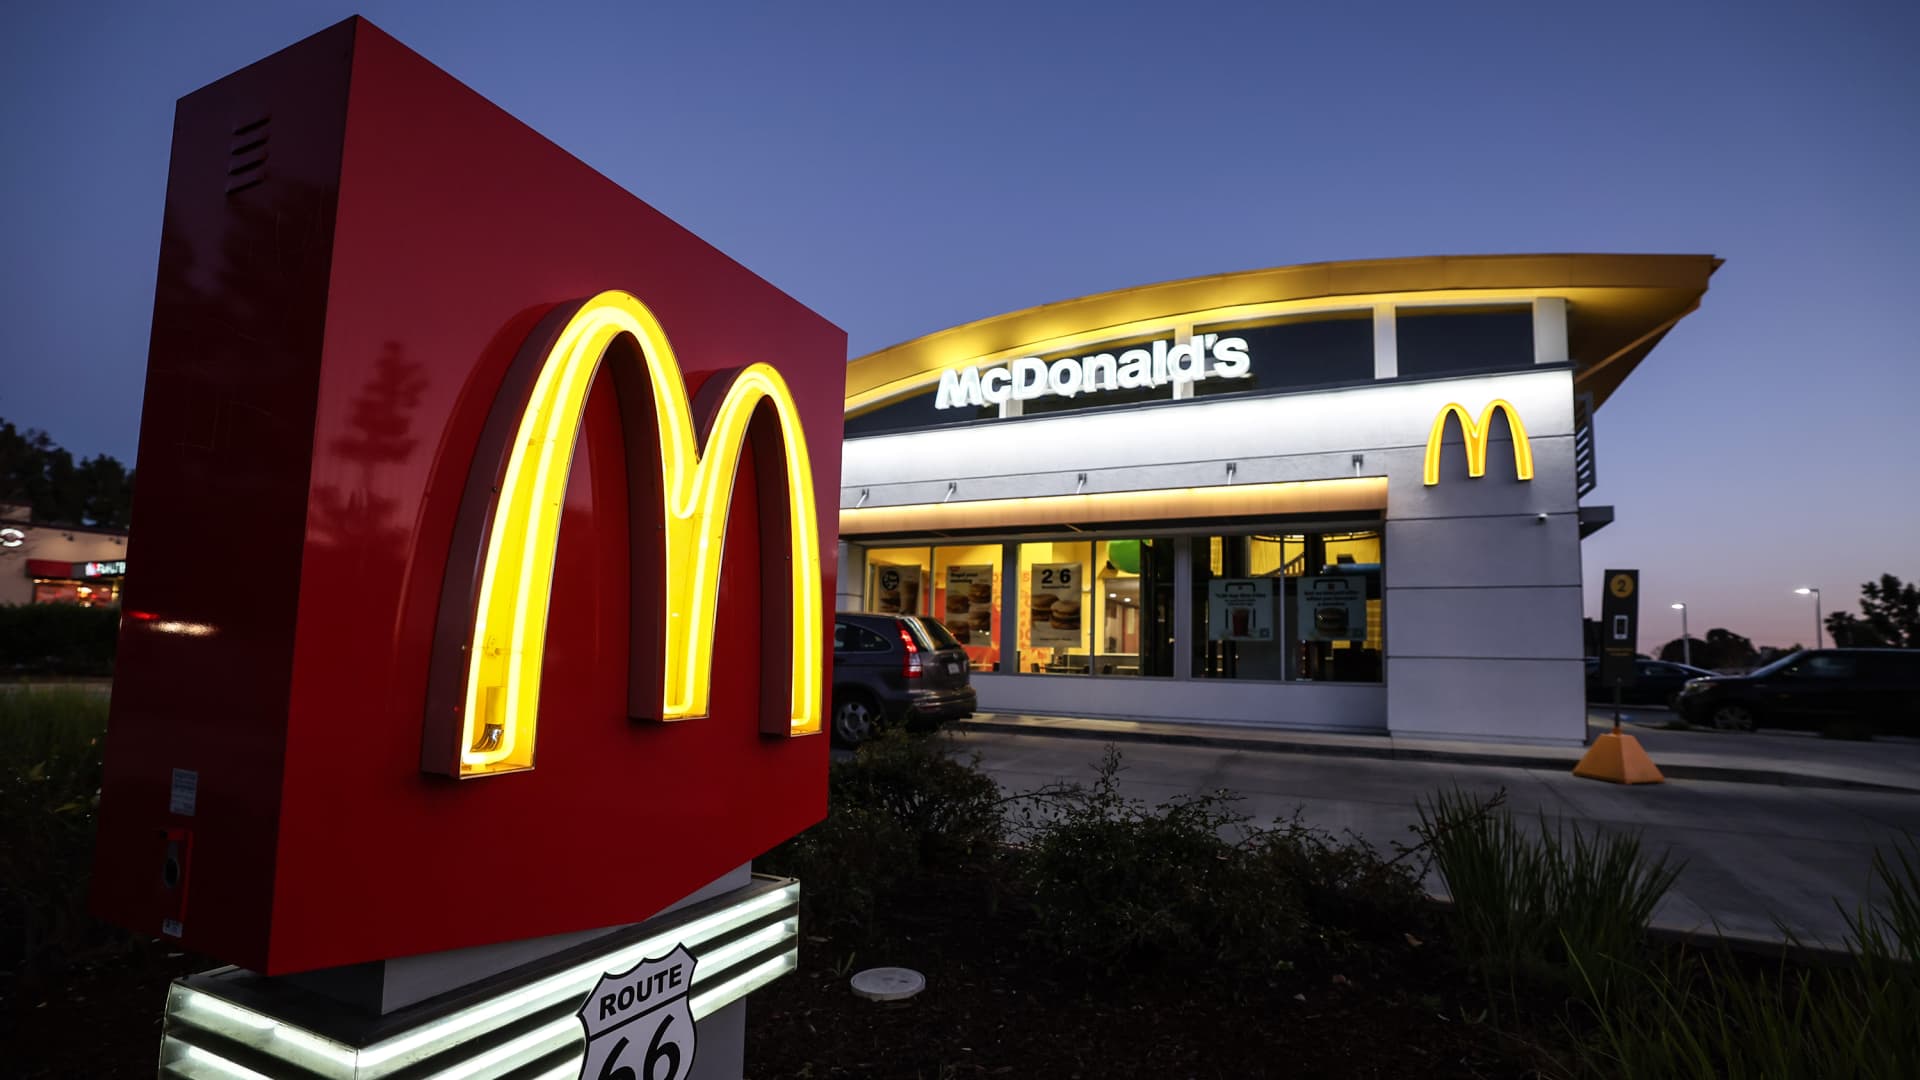 Long-predicted consumer pullback finally hits restaurants like Starbucks, KFC and McDonald’s